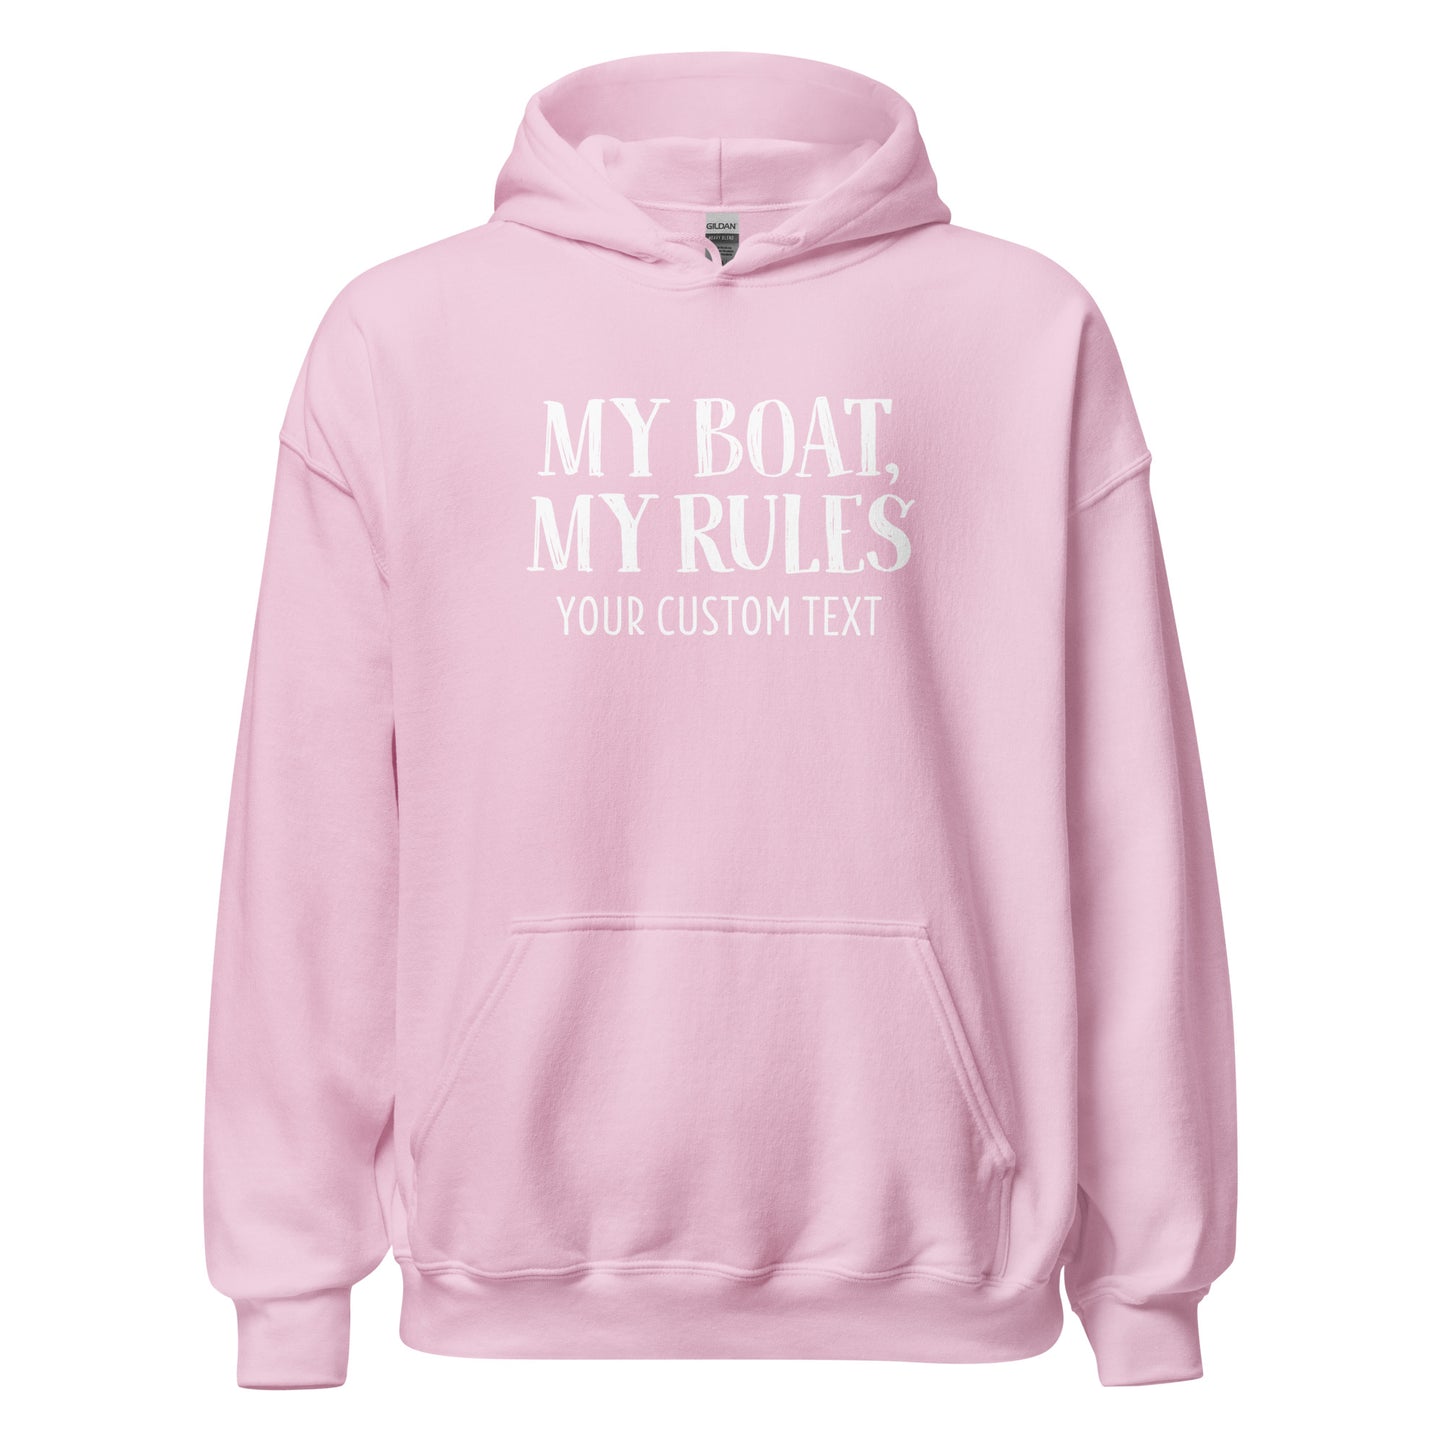 My Boat, My Rules - Smith Mountain Lake Unisex Hoodie Sweatshirt